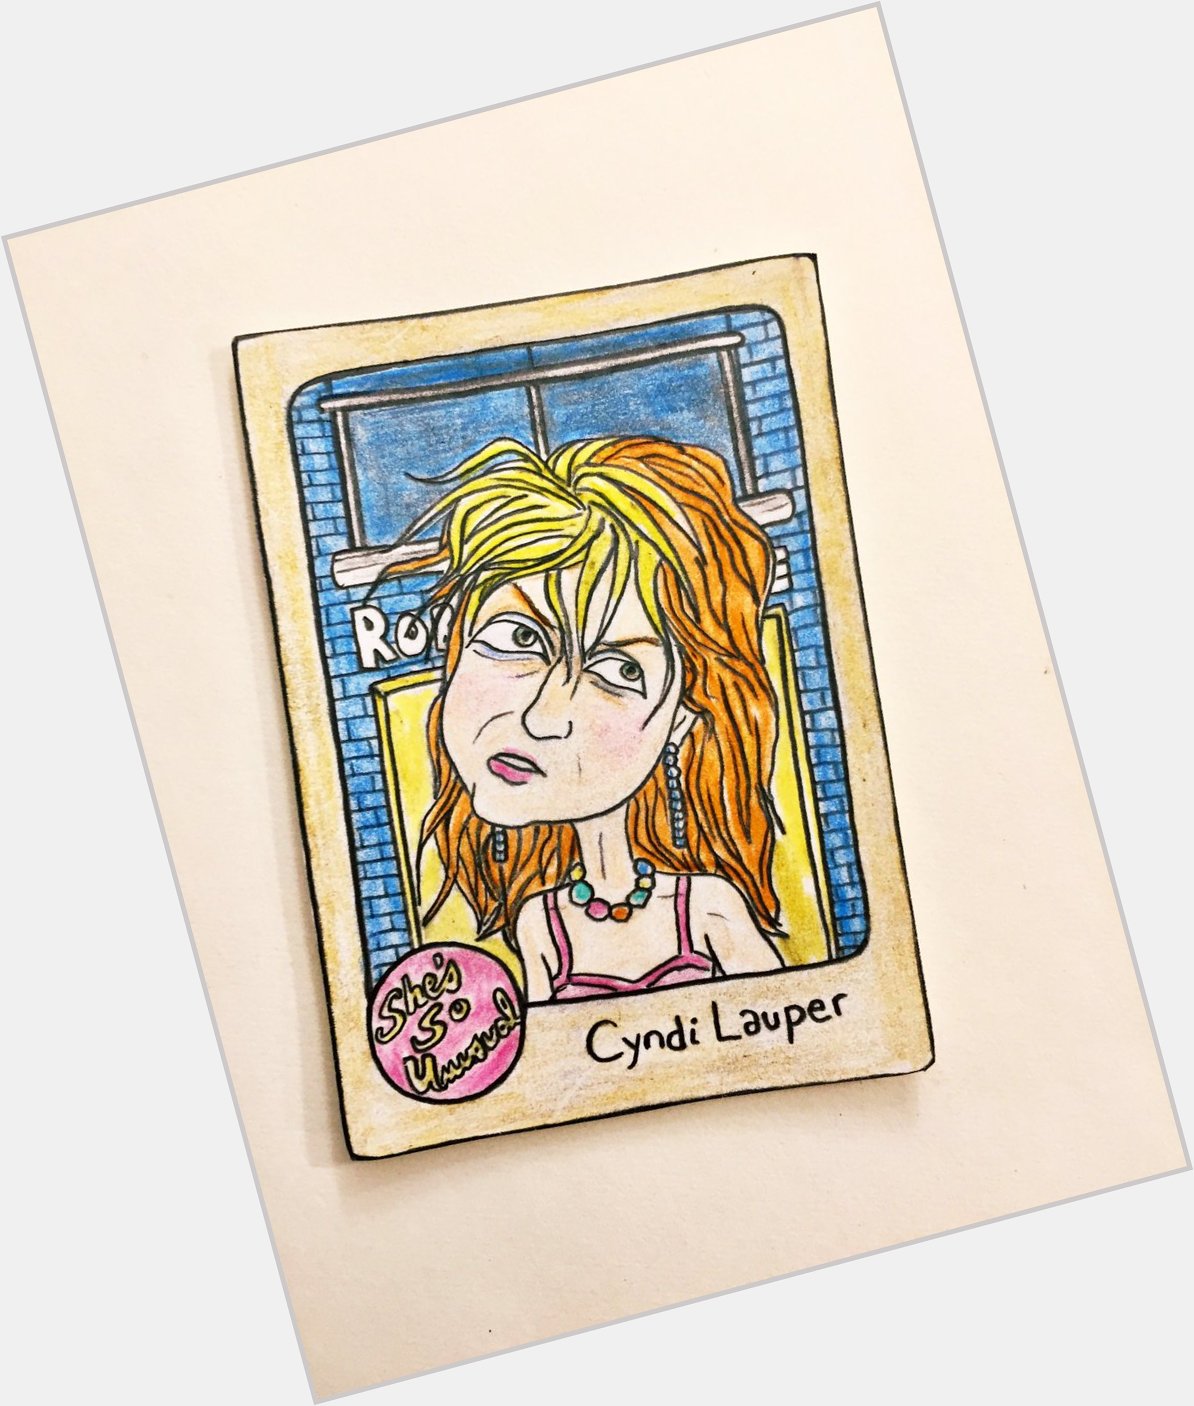 Happy birthday, Cyndi Lauper! 